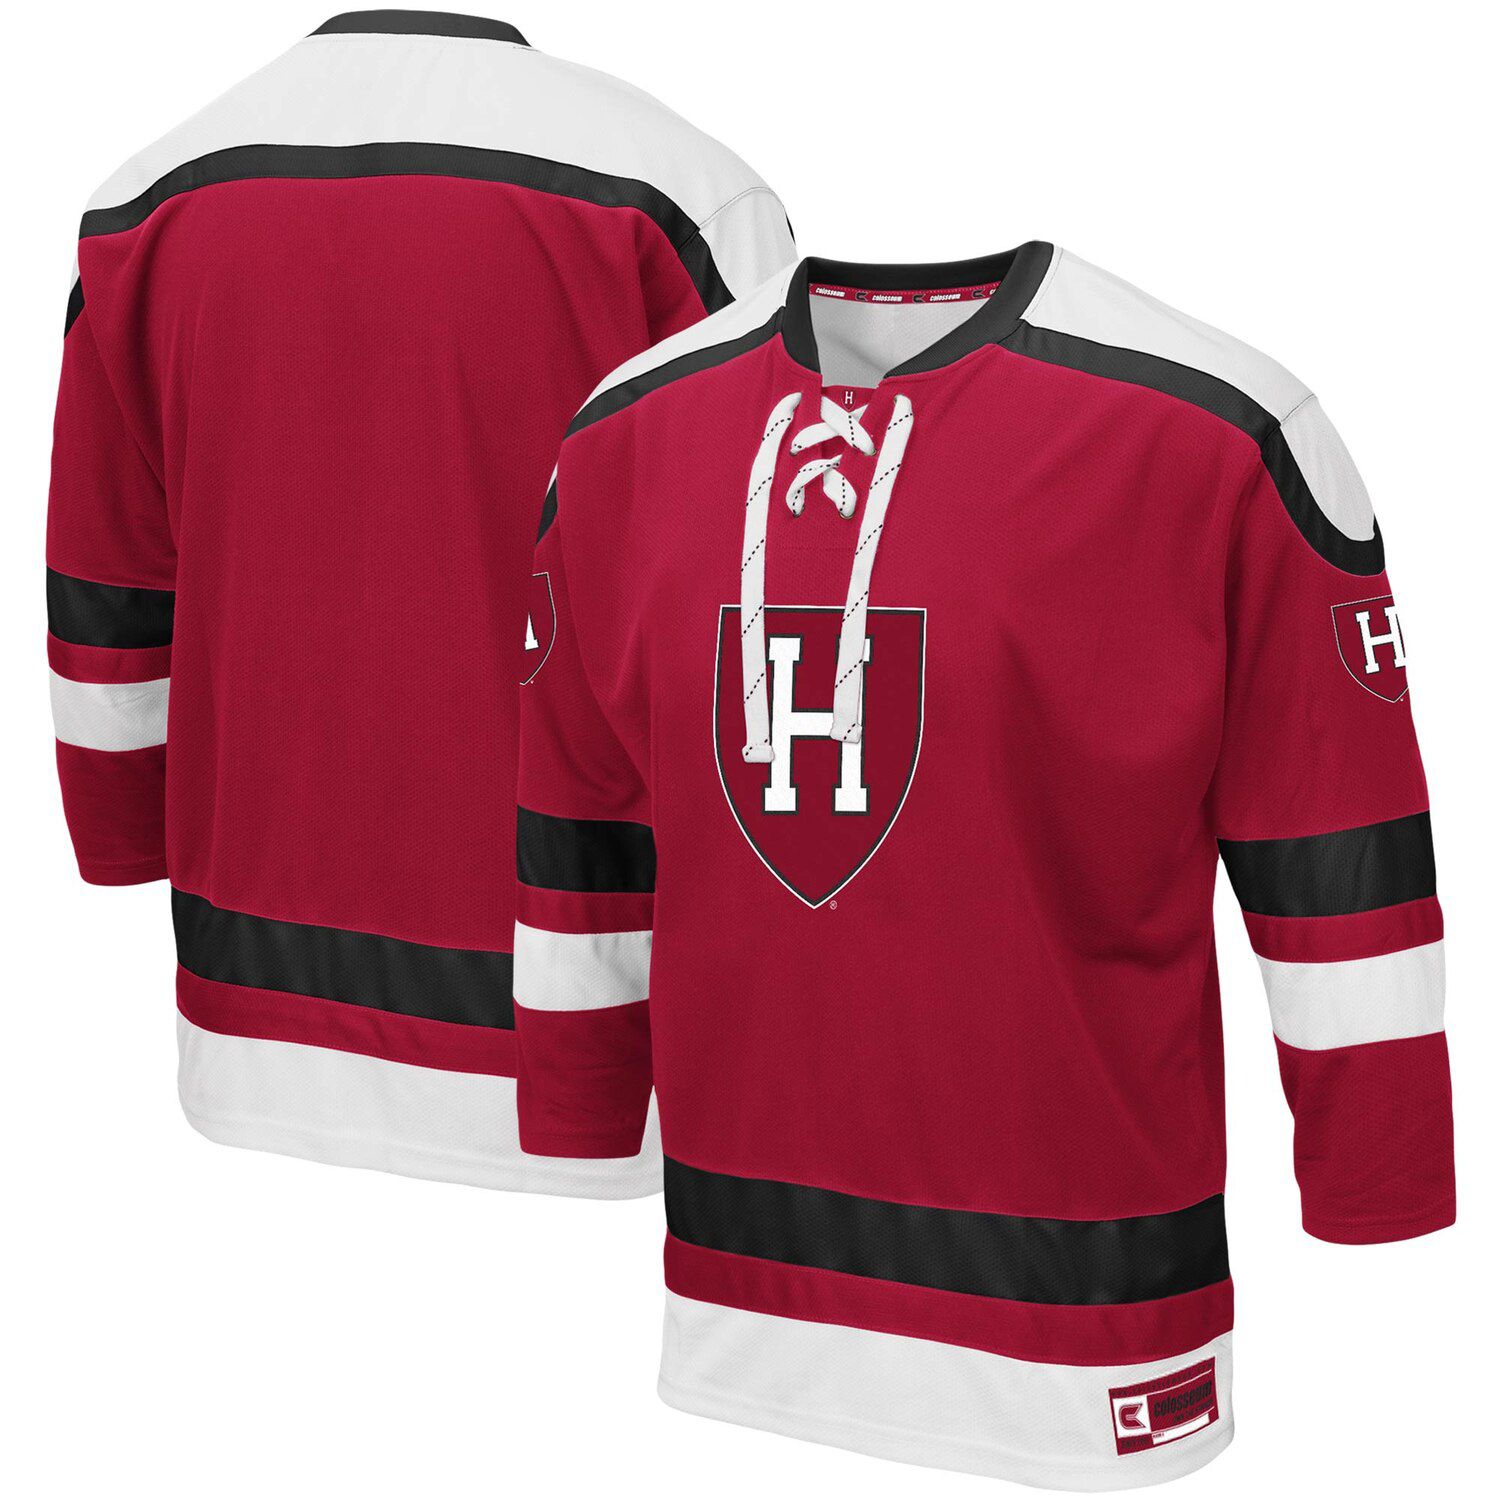 Harvard Crimson Mr. Plow Hockey Jersey 